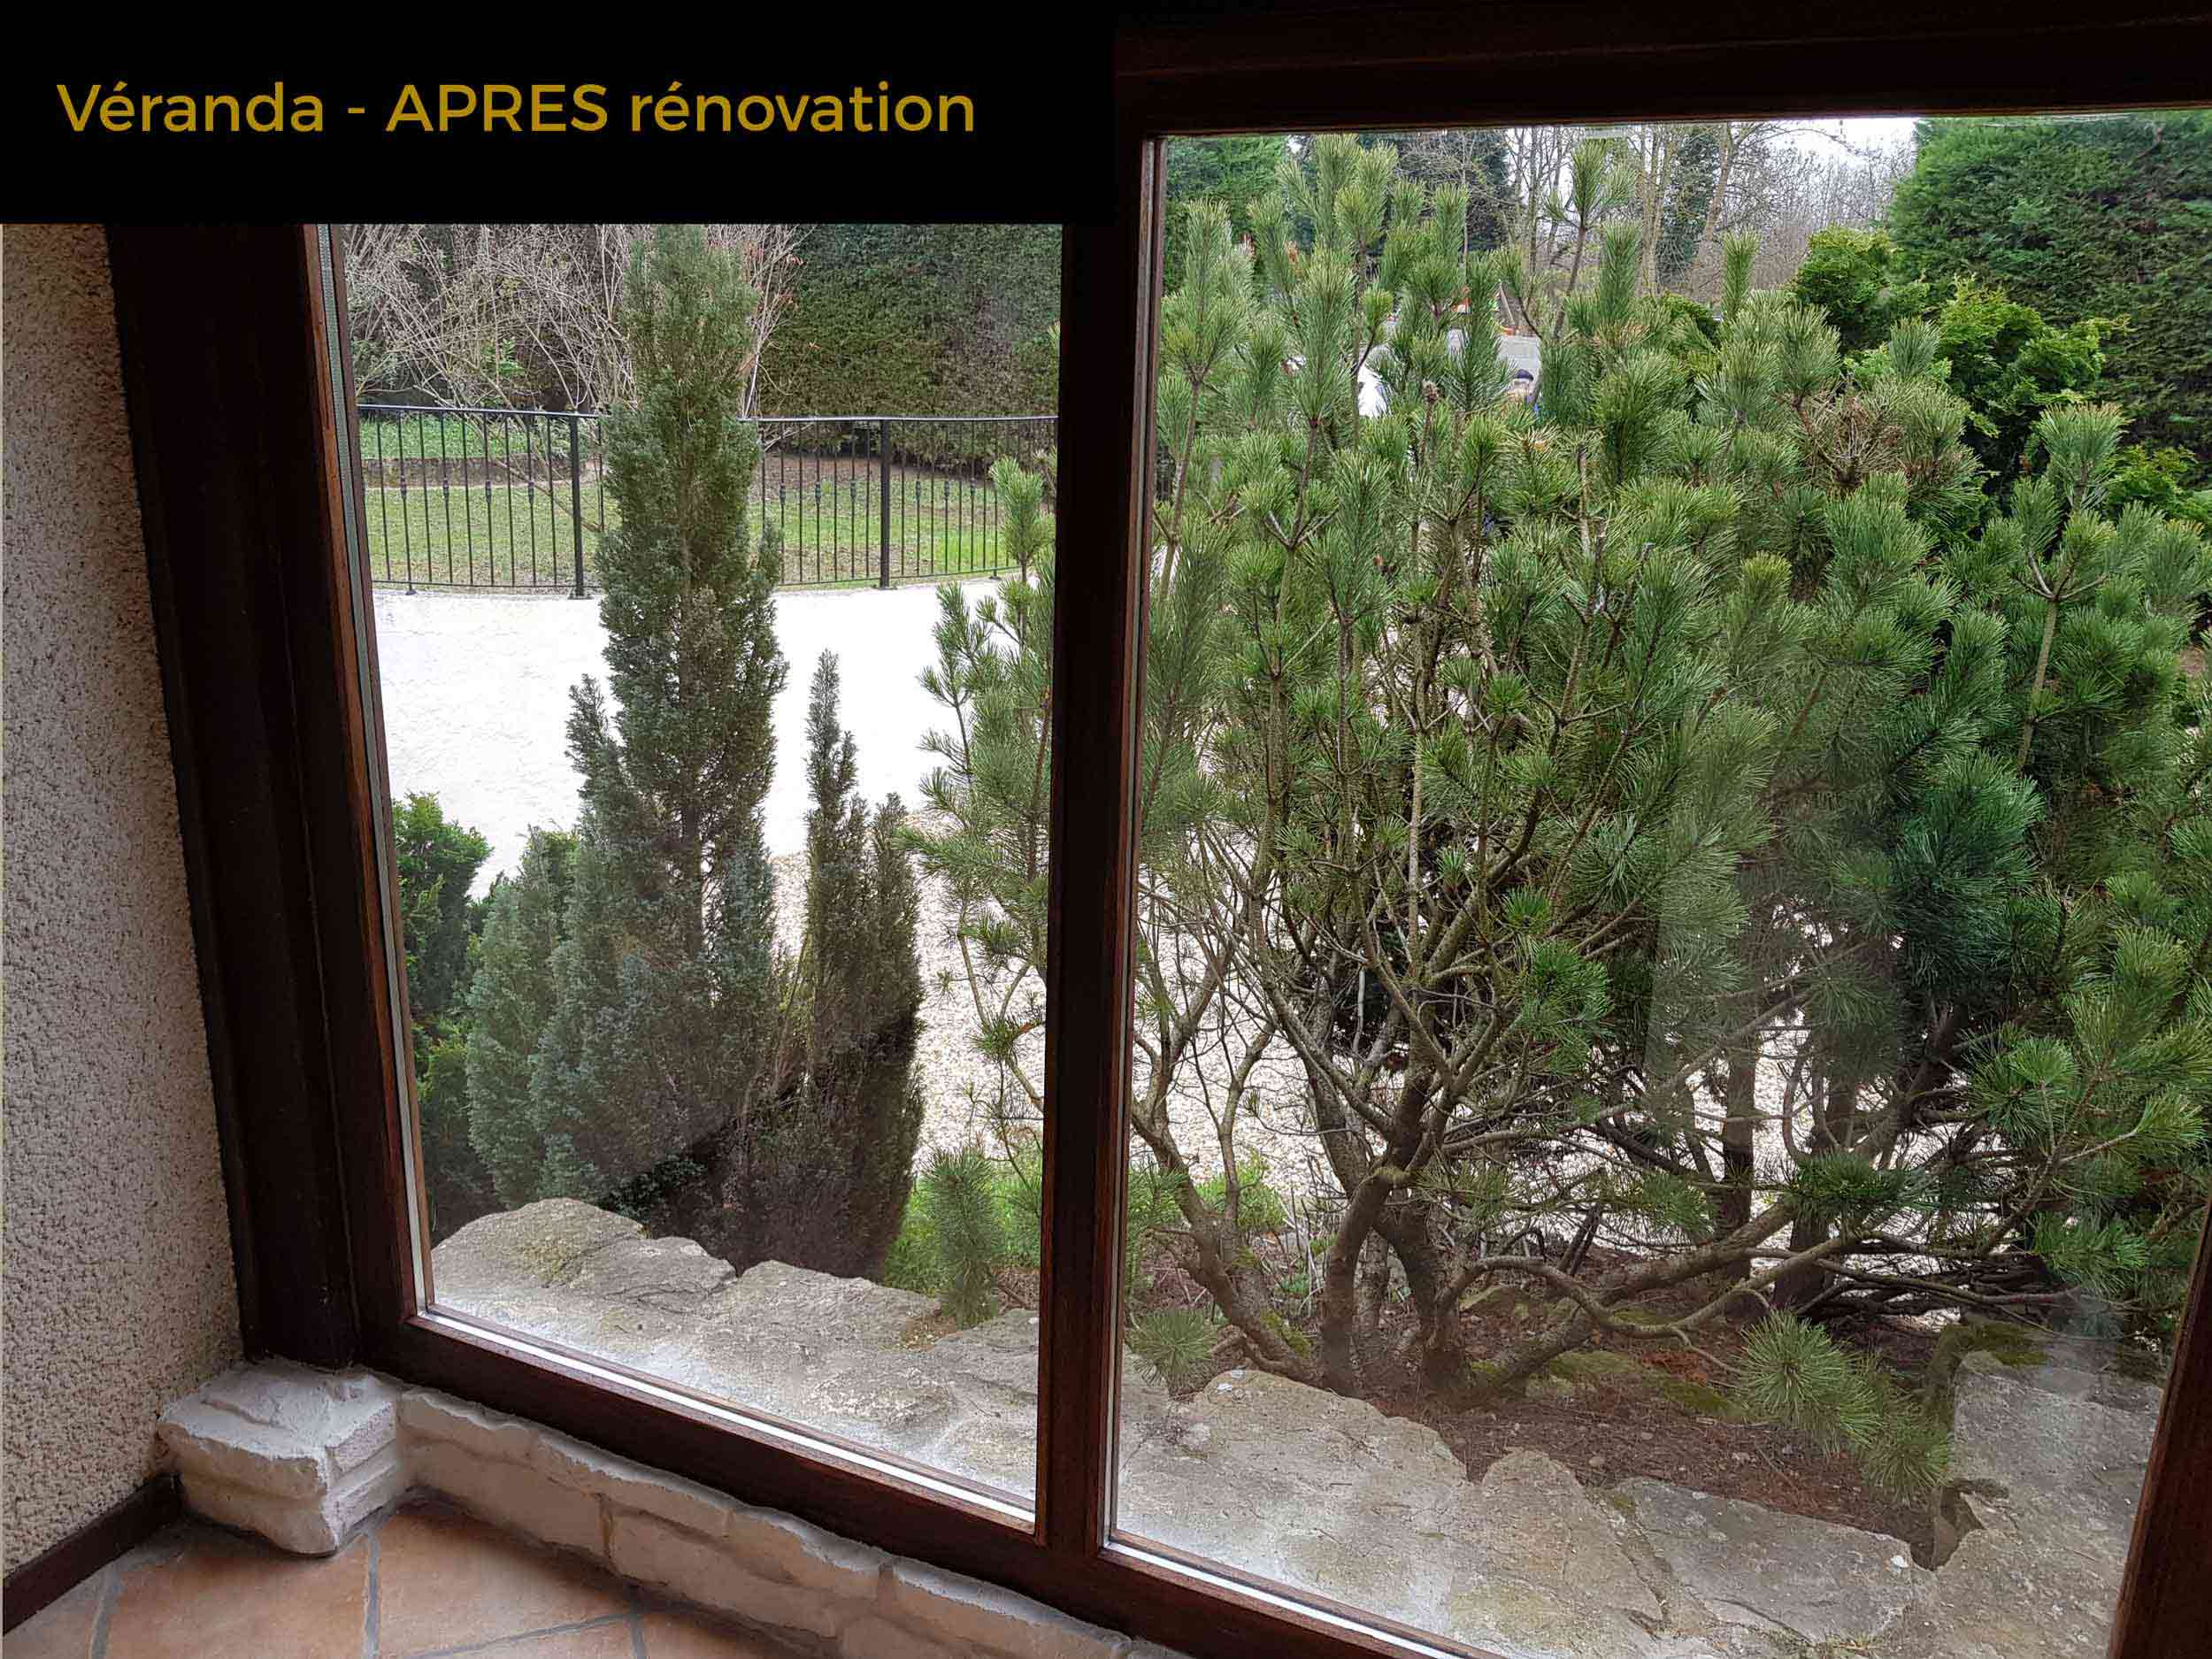 2-renovation-veranda-bois-apres